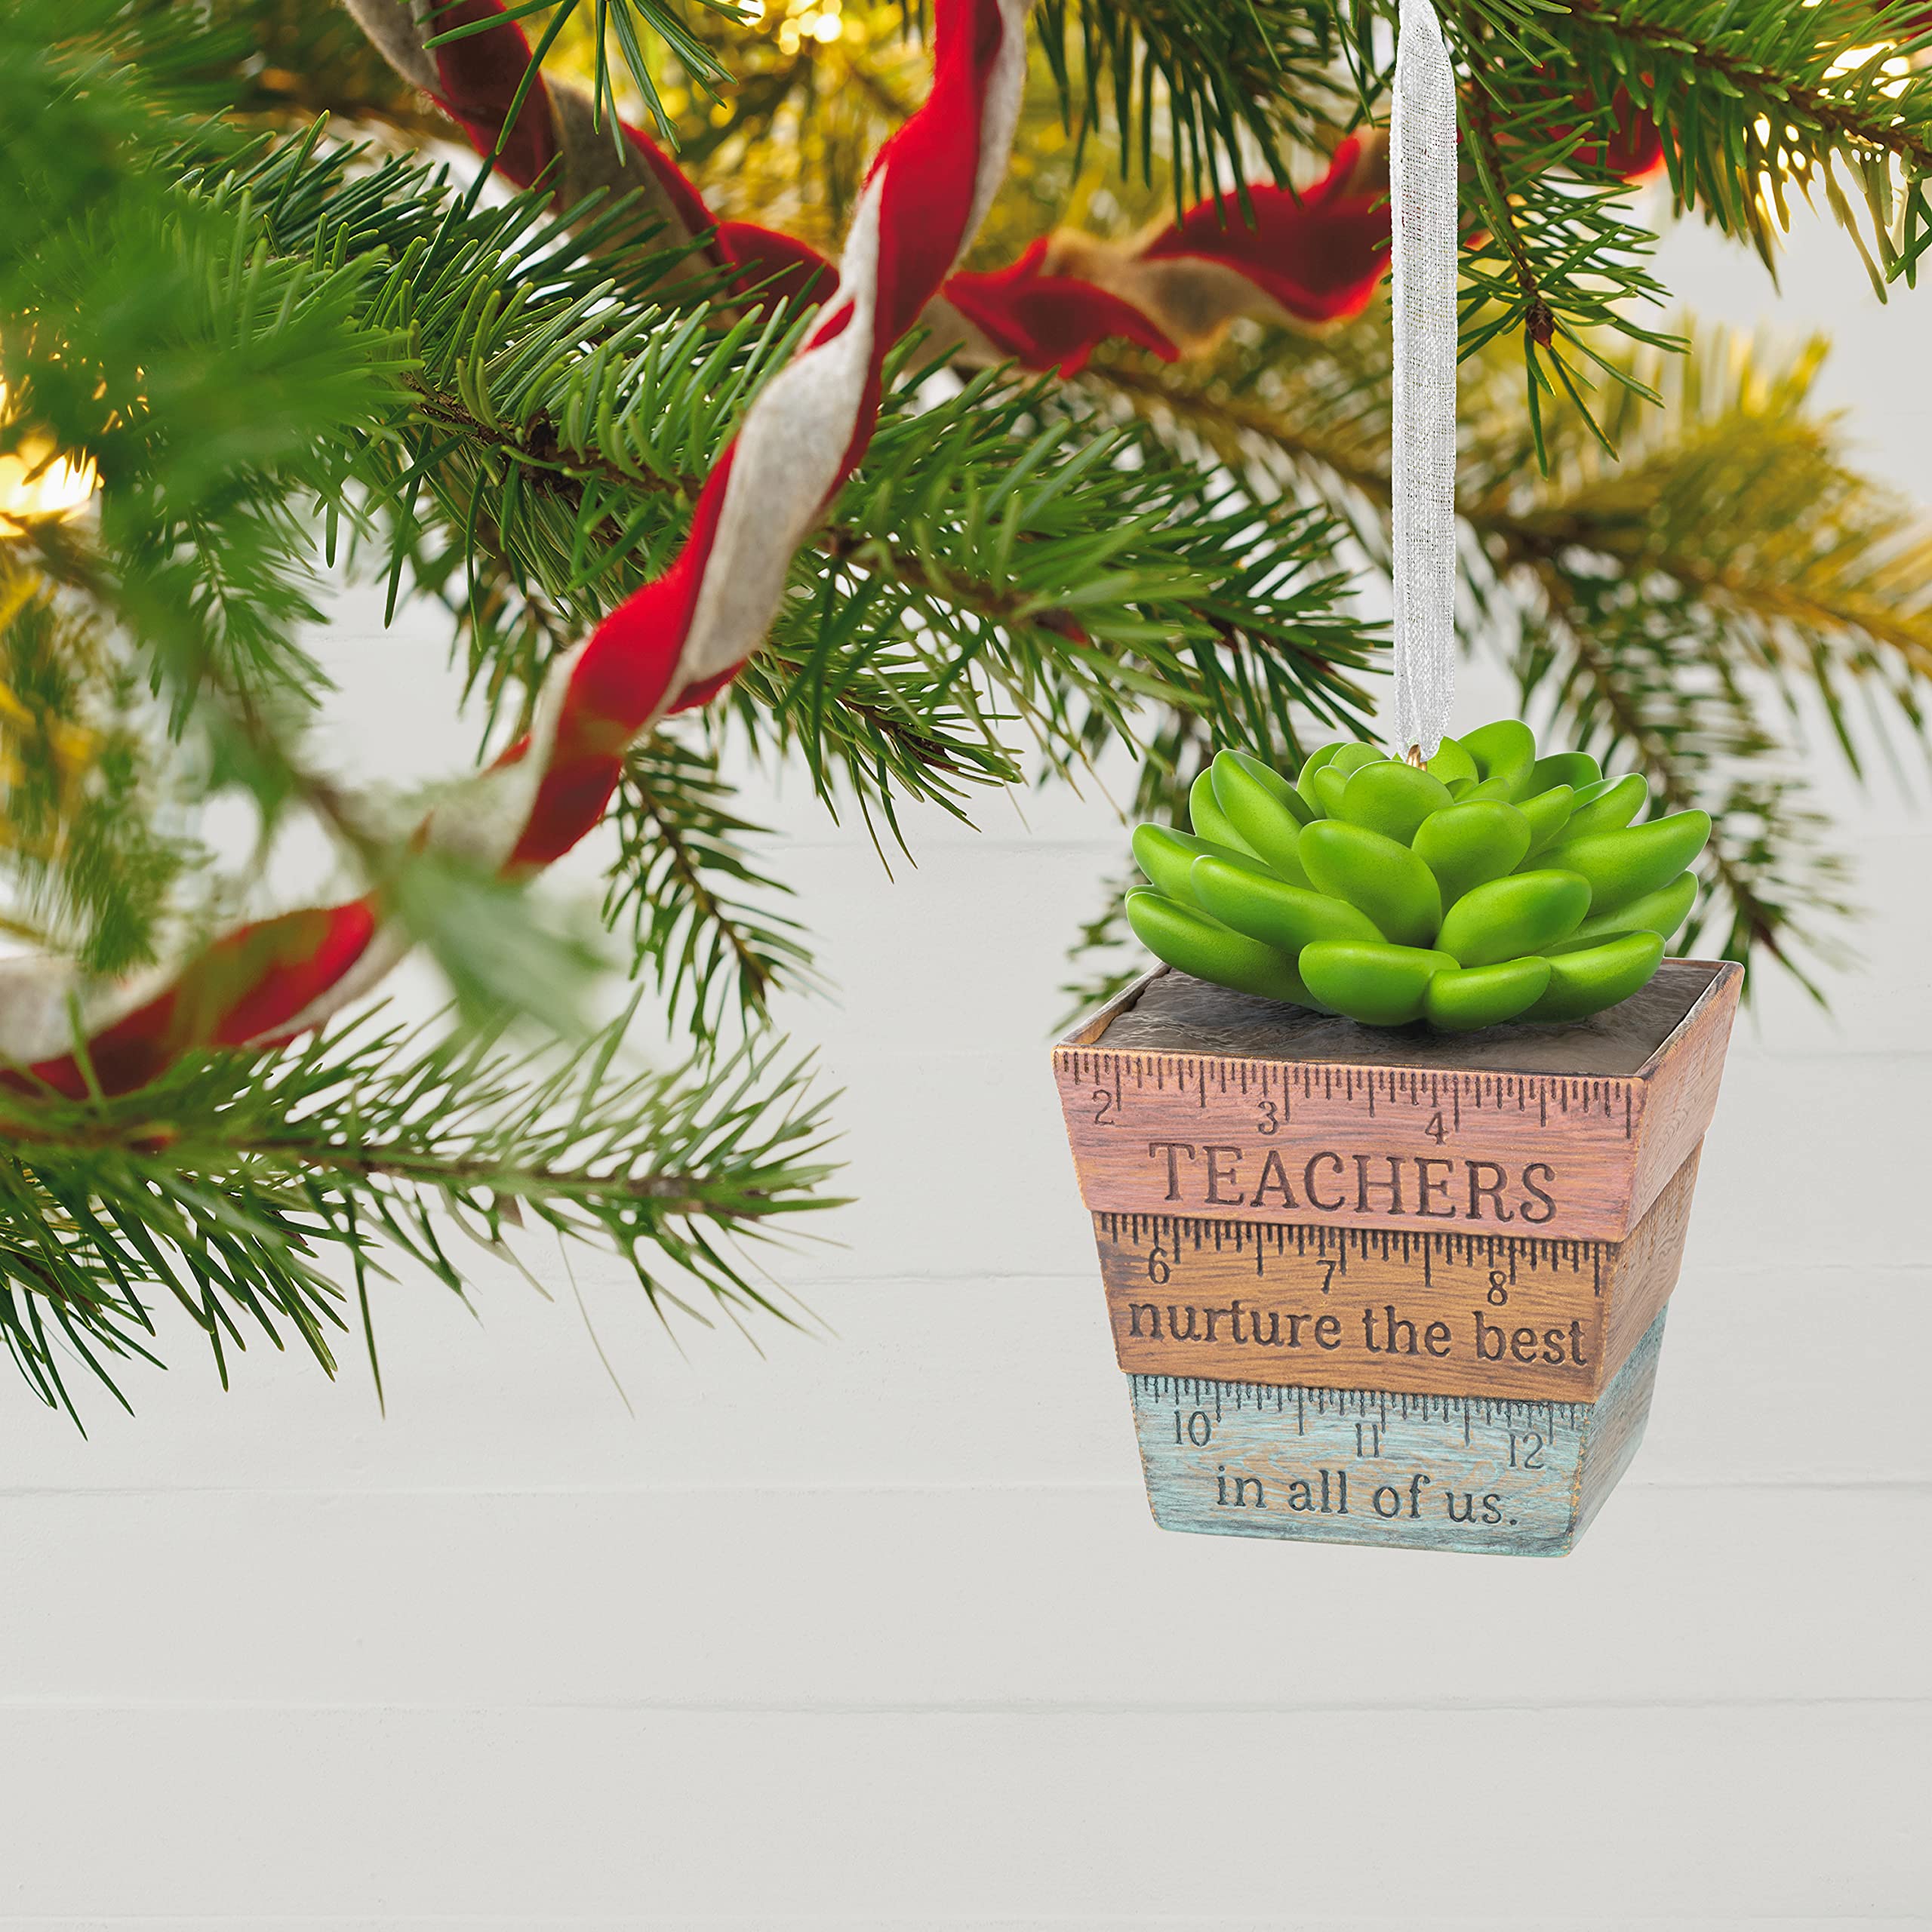 Thank You, Teacher! Keepsake Christmas Ornament 2021